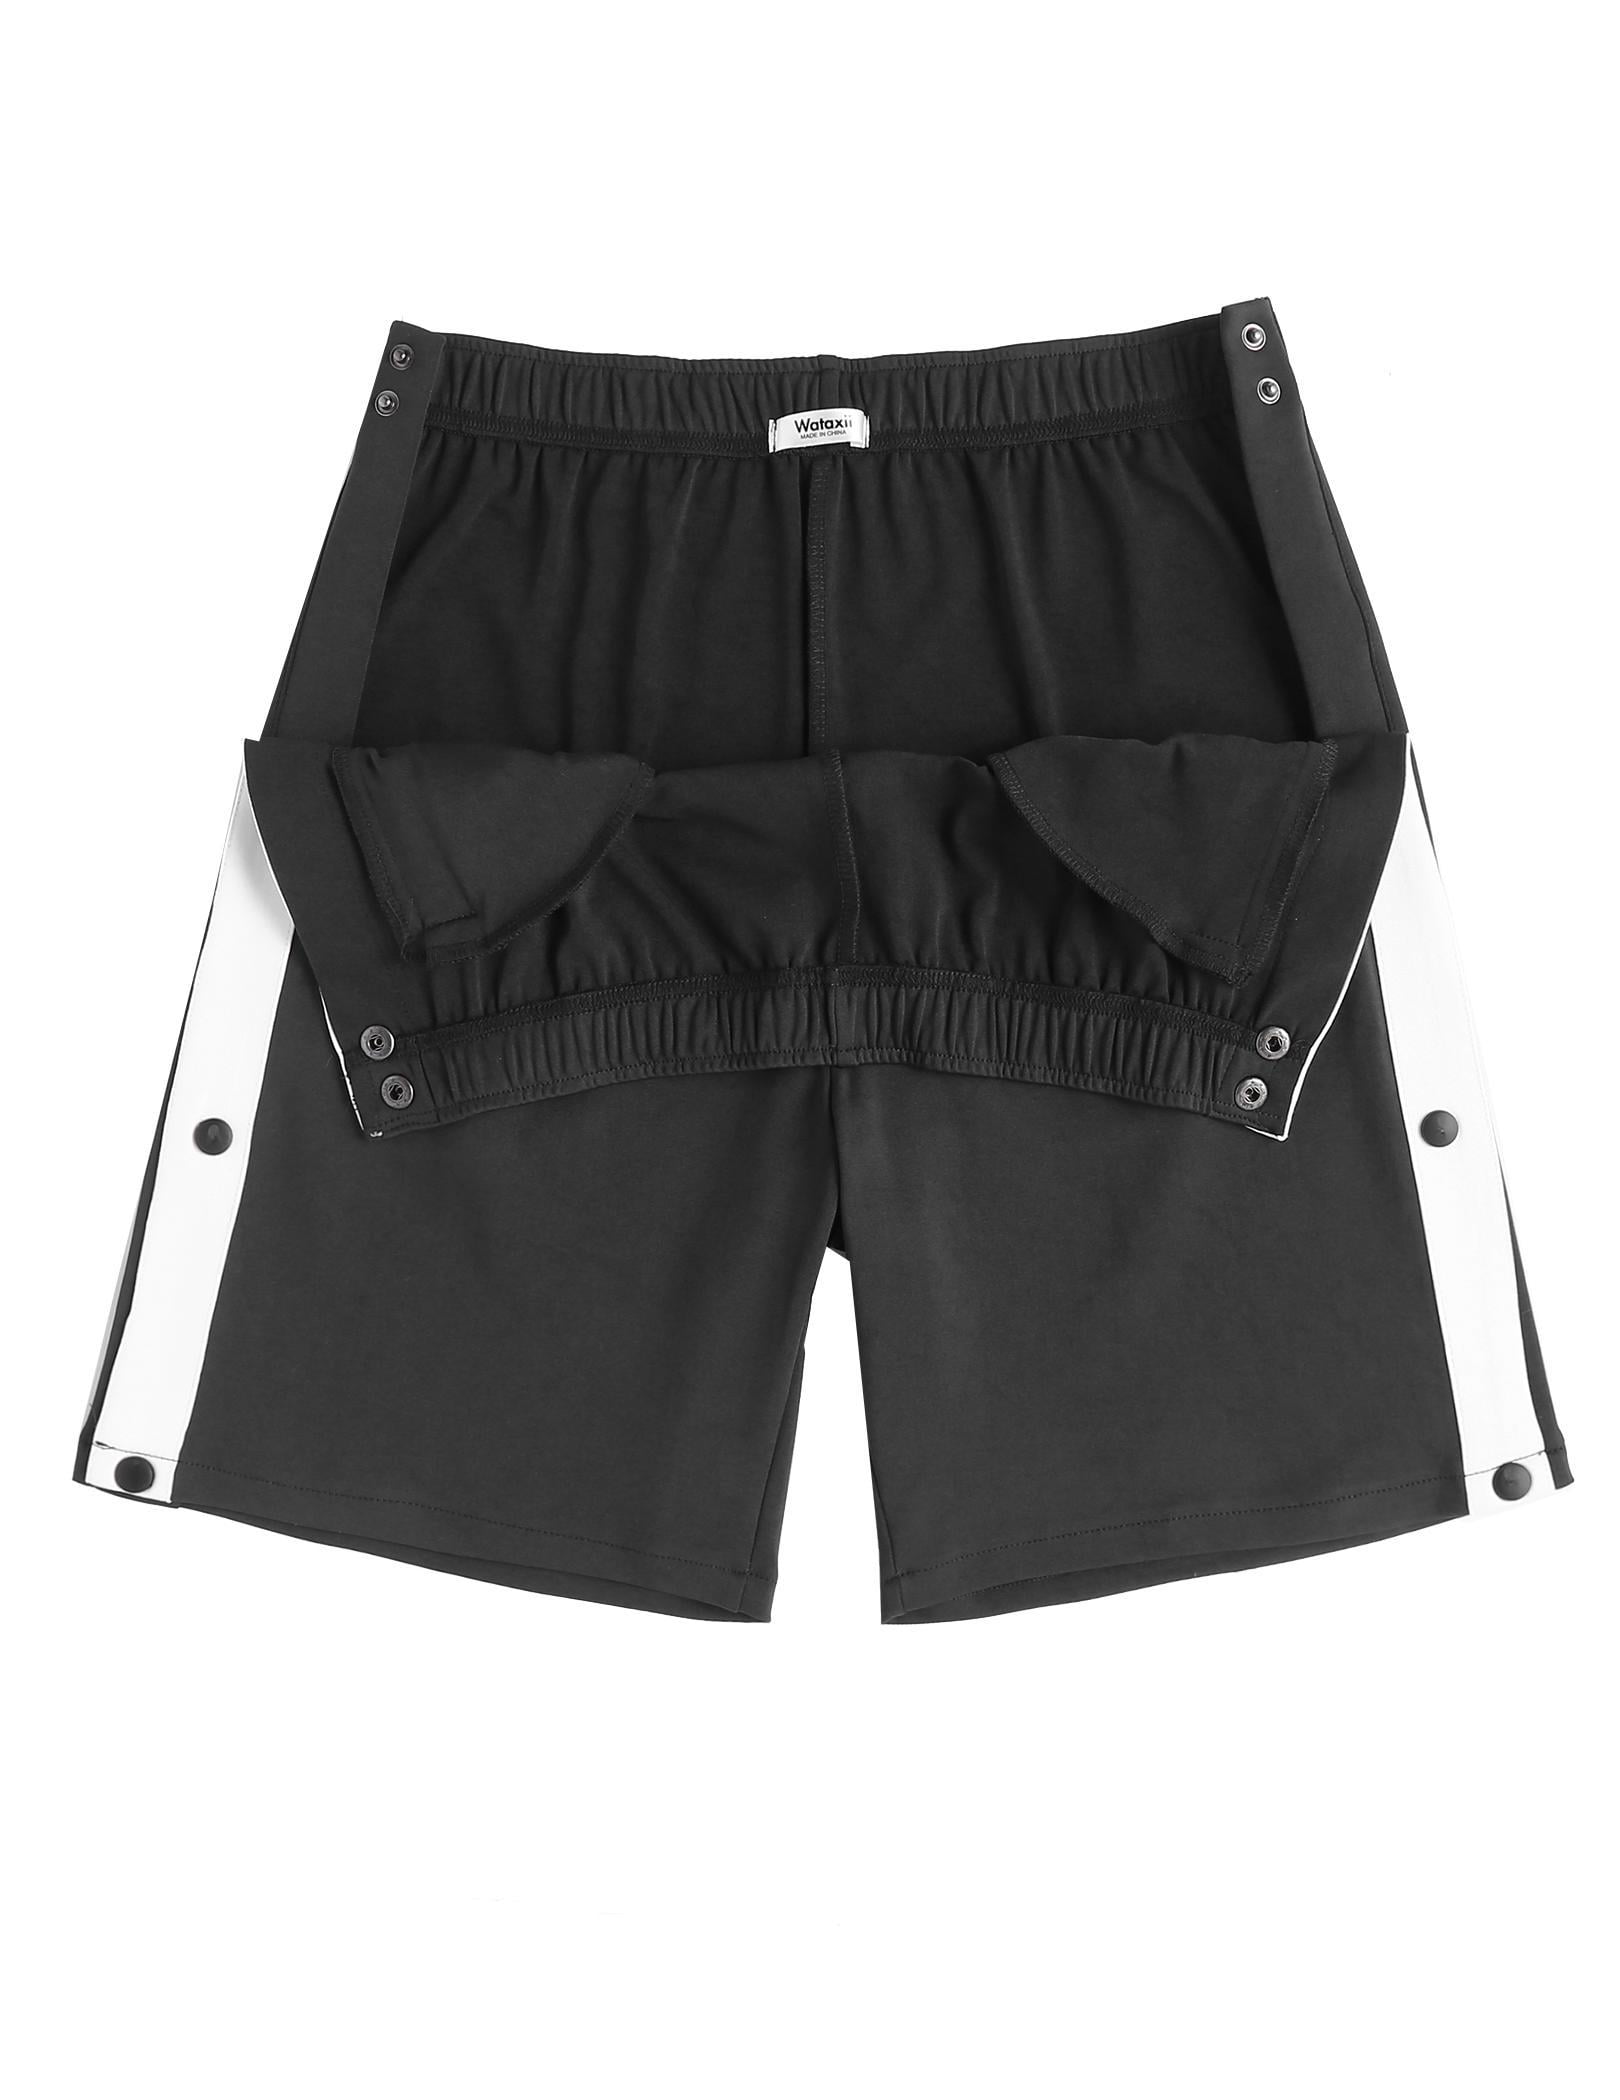 Wataxii Tear Away Shorts for Men Post Surgery Adaptive Clothing